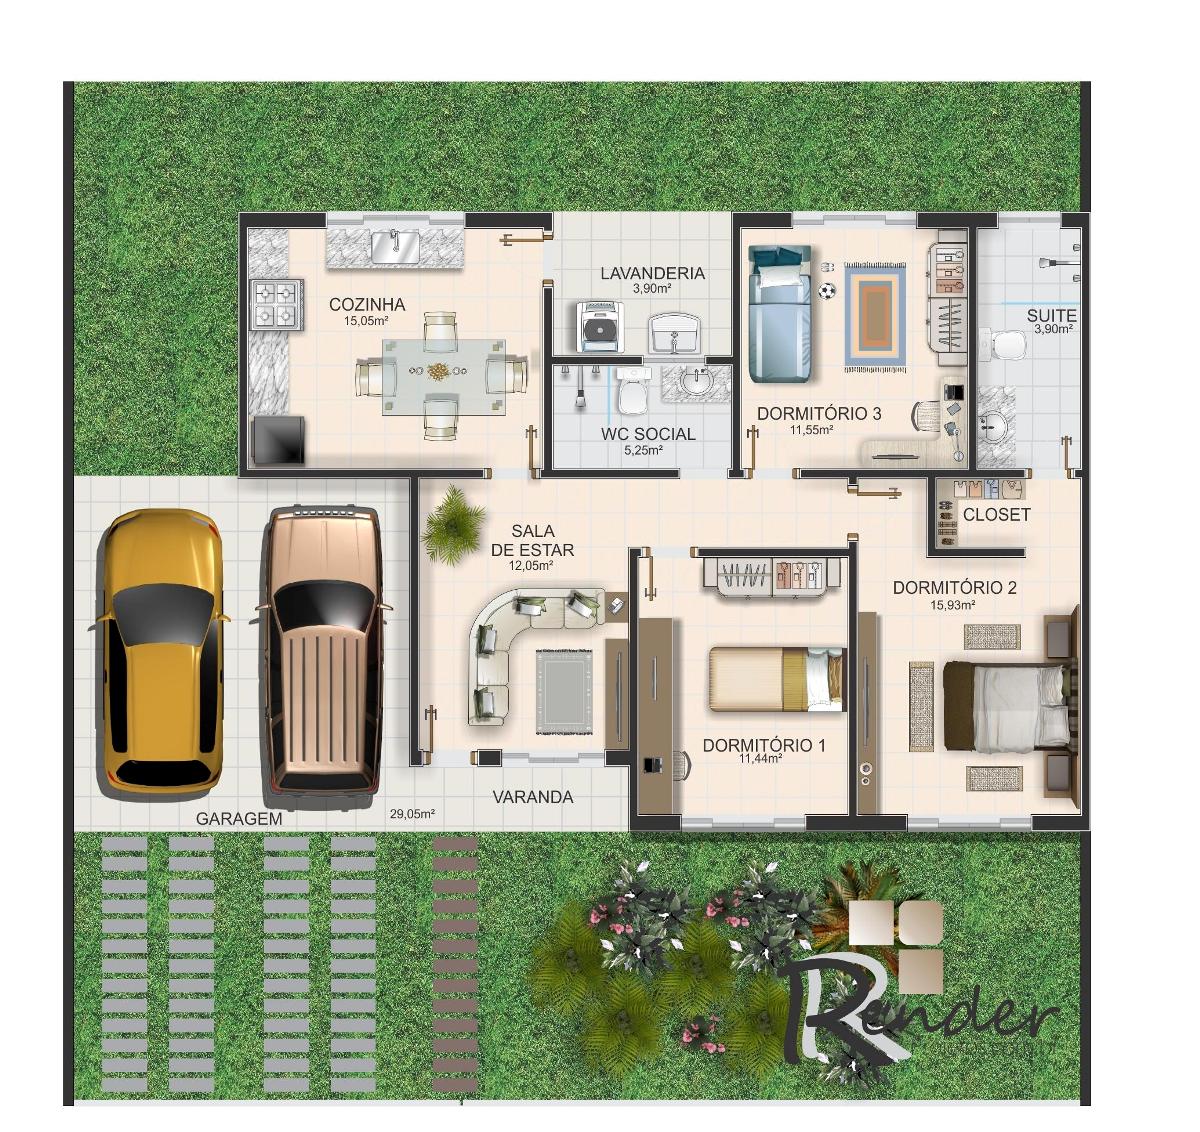 Planta de Casa Modelo de Casa Térrea com 3 Quartos  - plantas de casas com 3 quartos simples